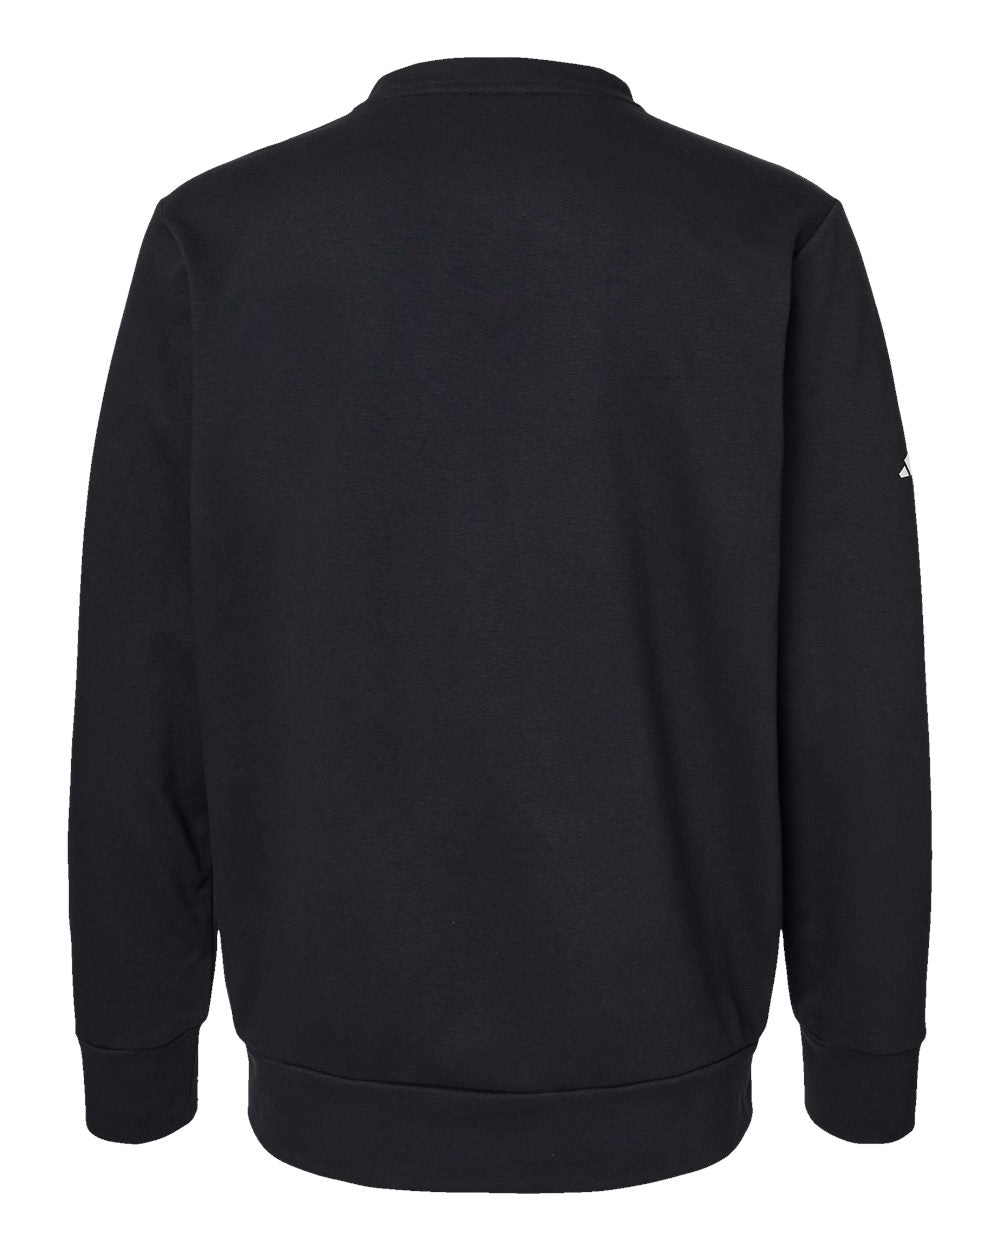 Hardwood - Adidas - Fleece Crewneck Sweatshirt - Black - IMS Apparel A434Black-S